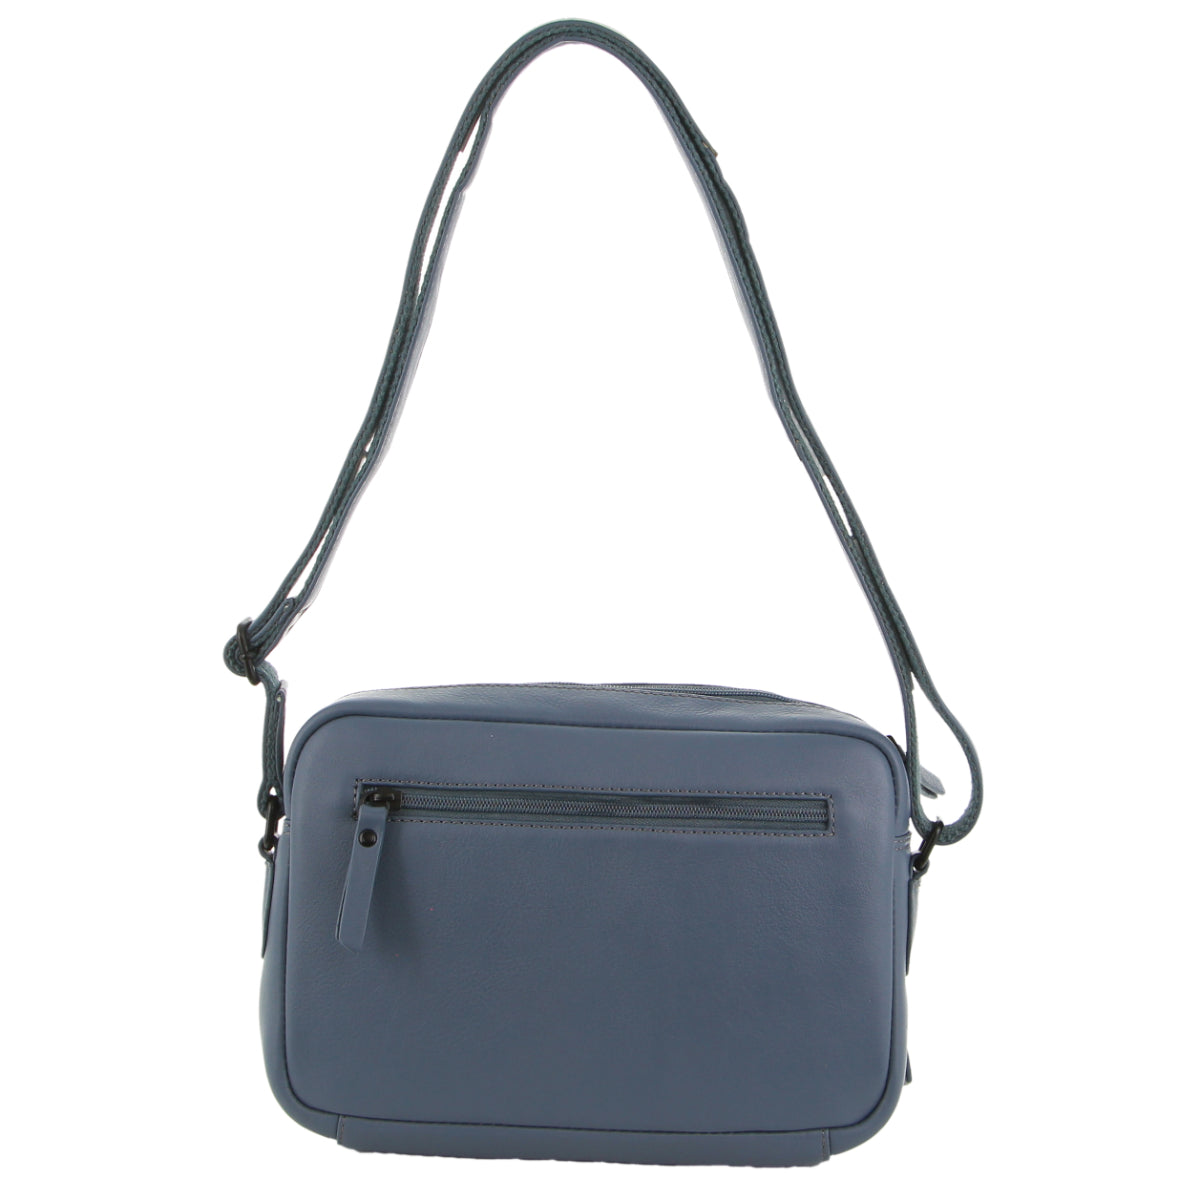 Milleni - NL3871 Small leather sidebag - Teal